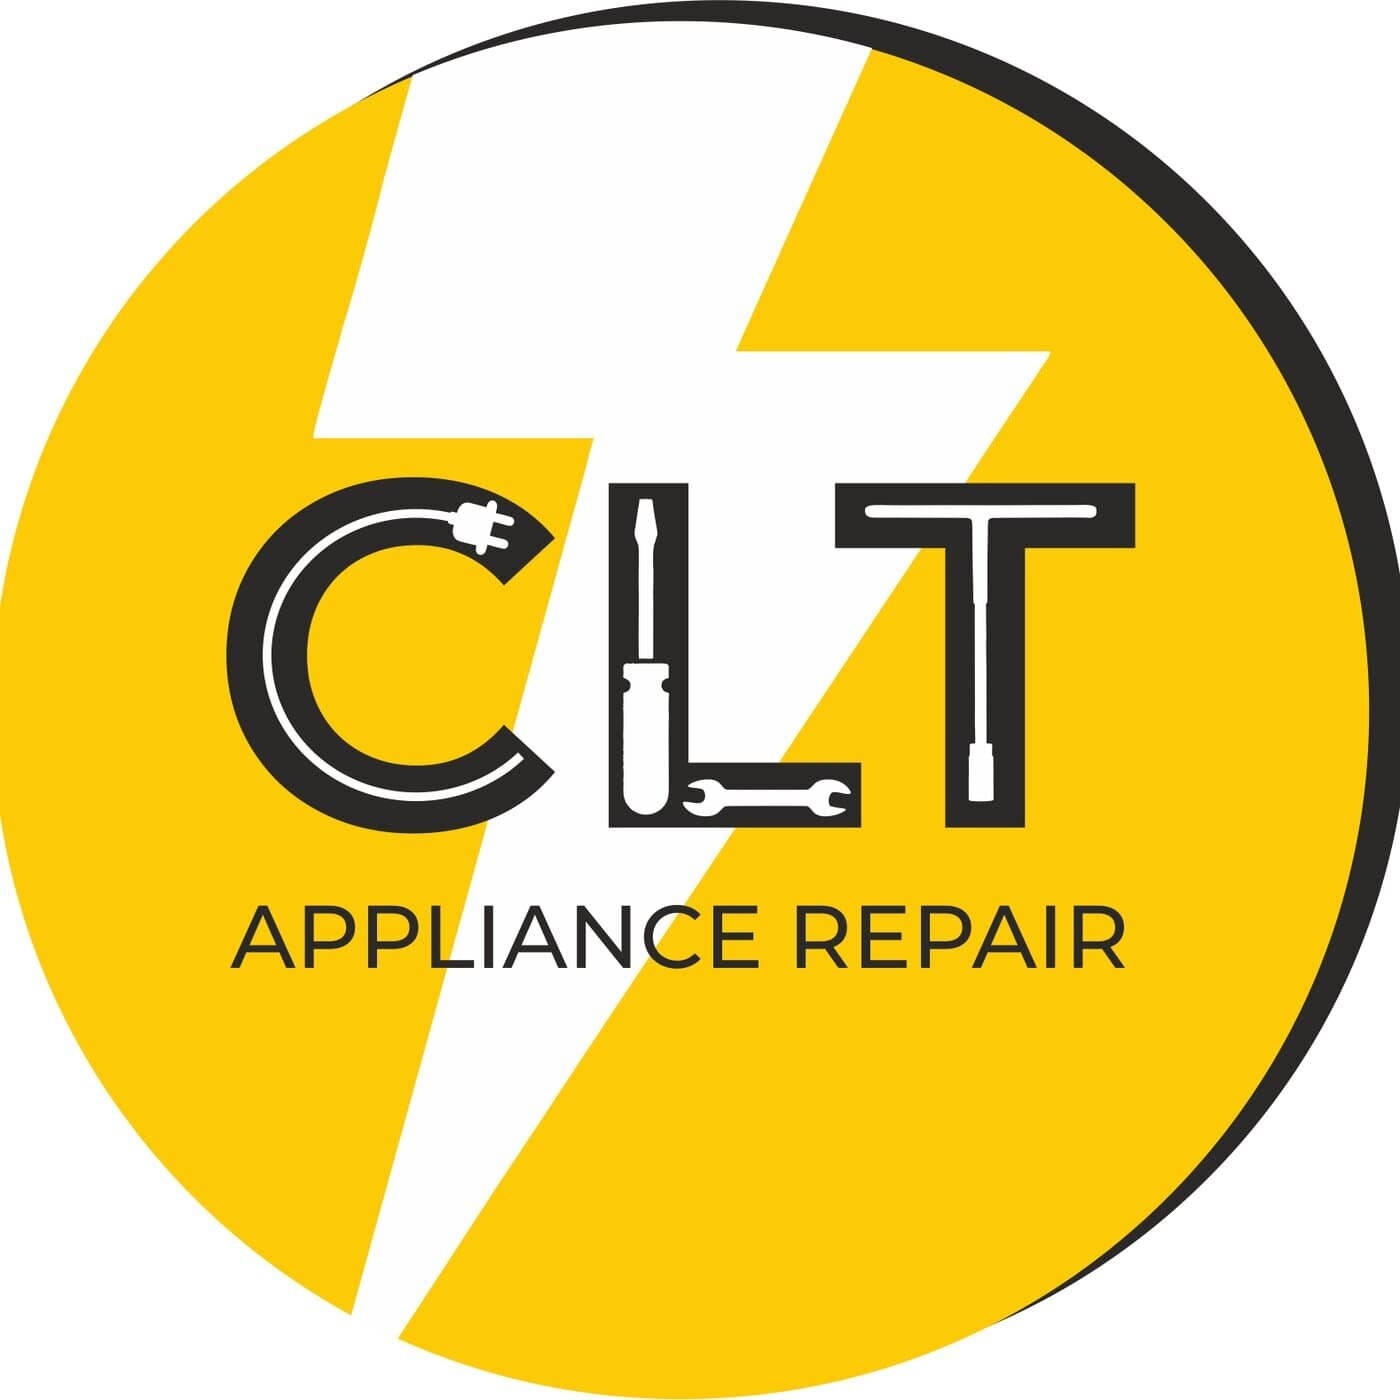 CLT Appliance Repair Profile Picture